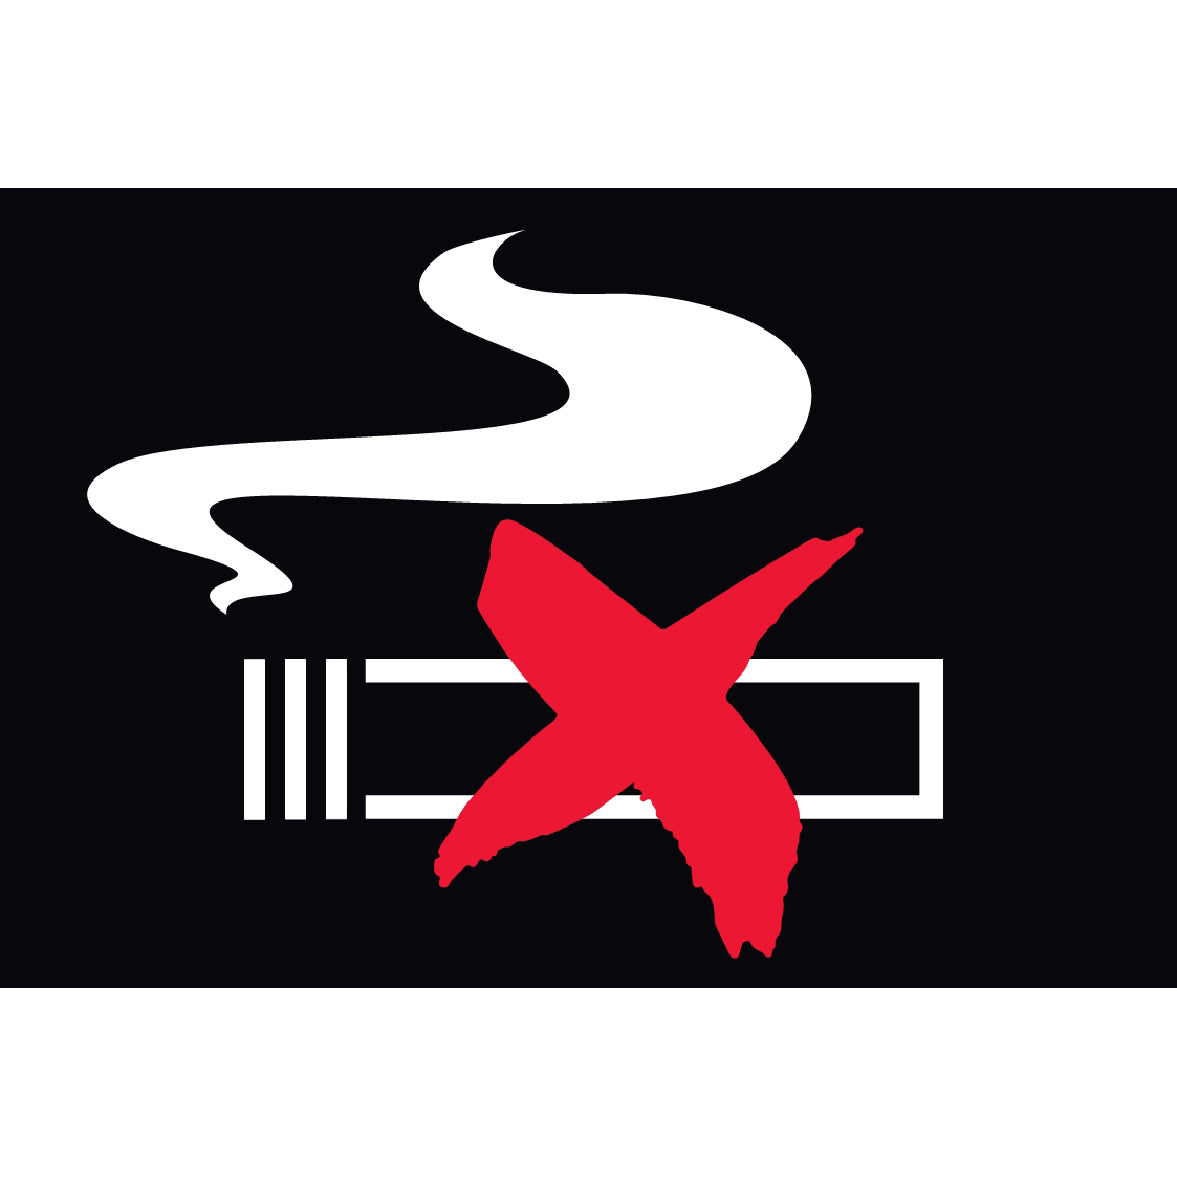 X - Zigarette Schild